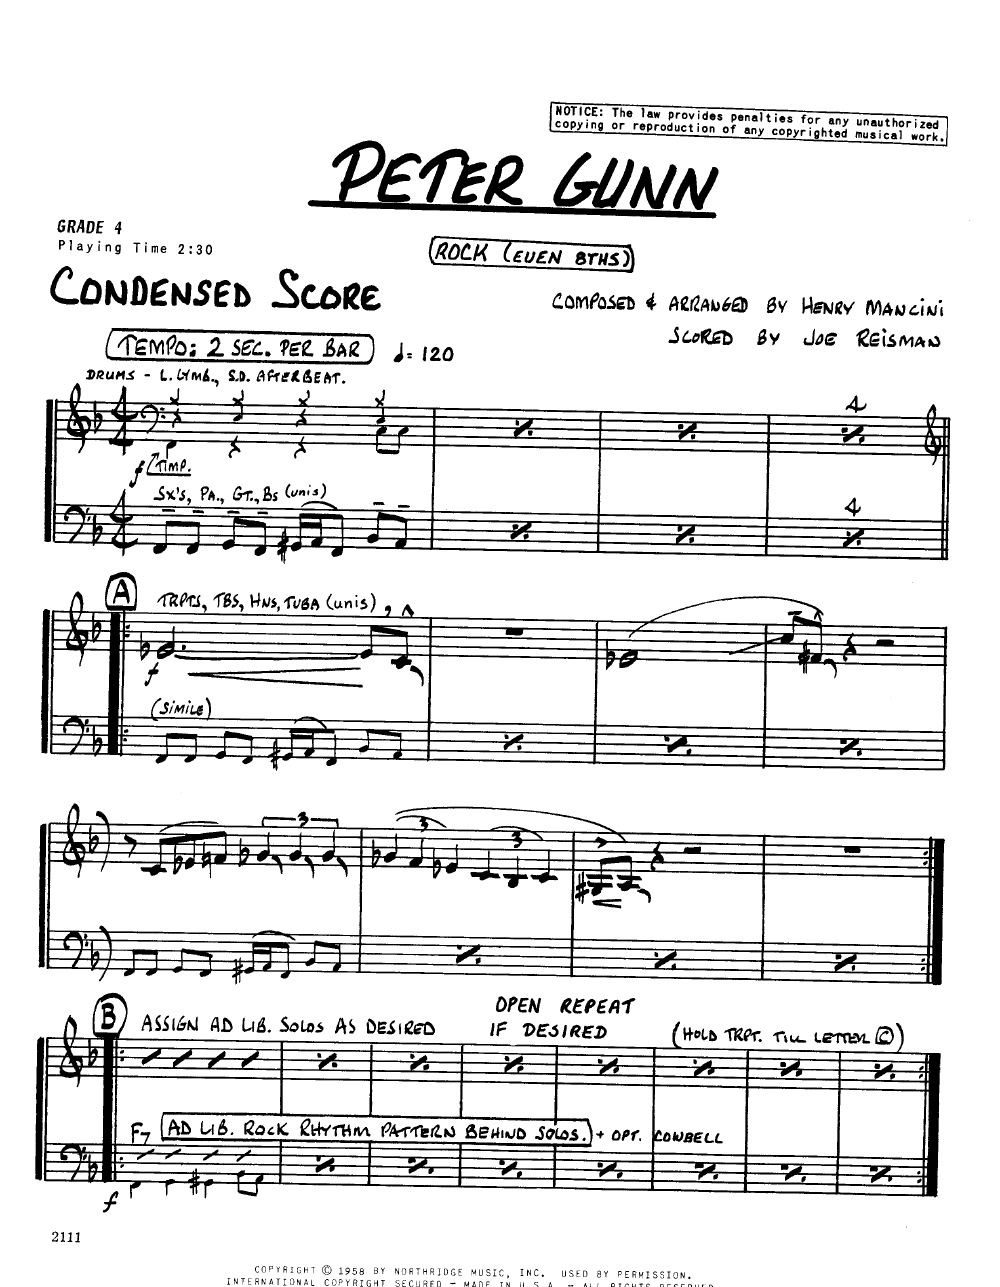 Henry Mancini – Gunn Number One! (Music From The Film Score